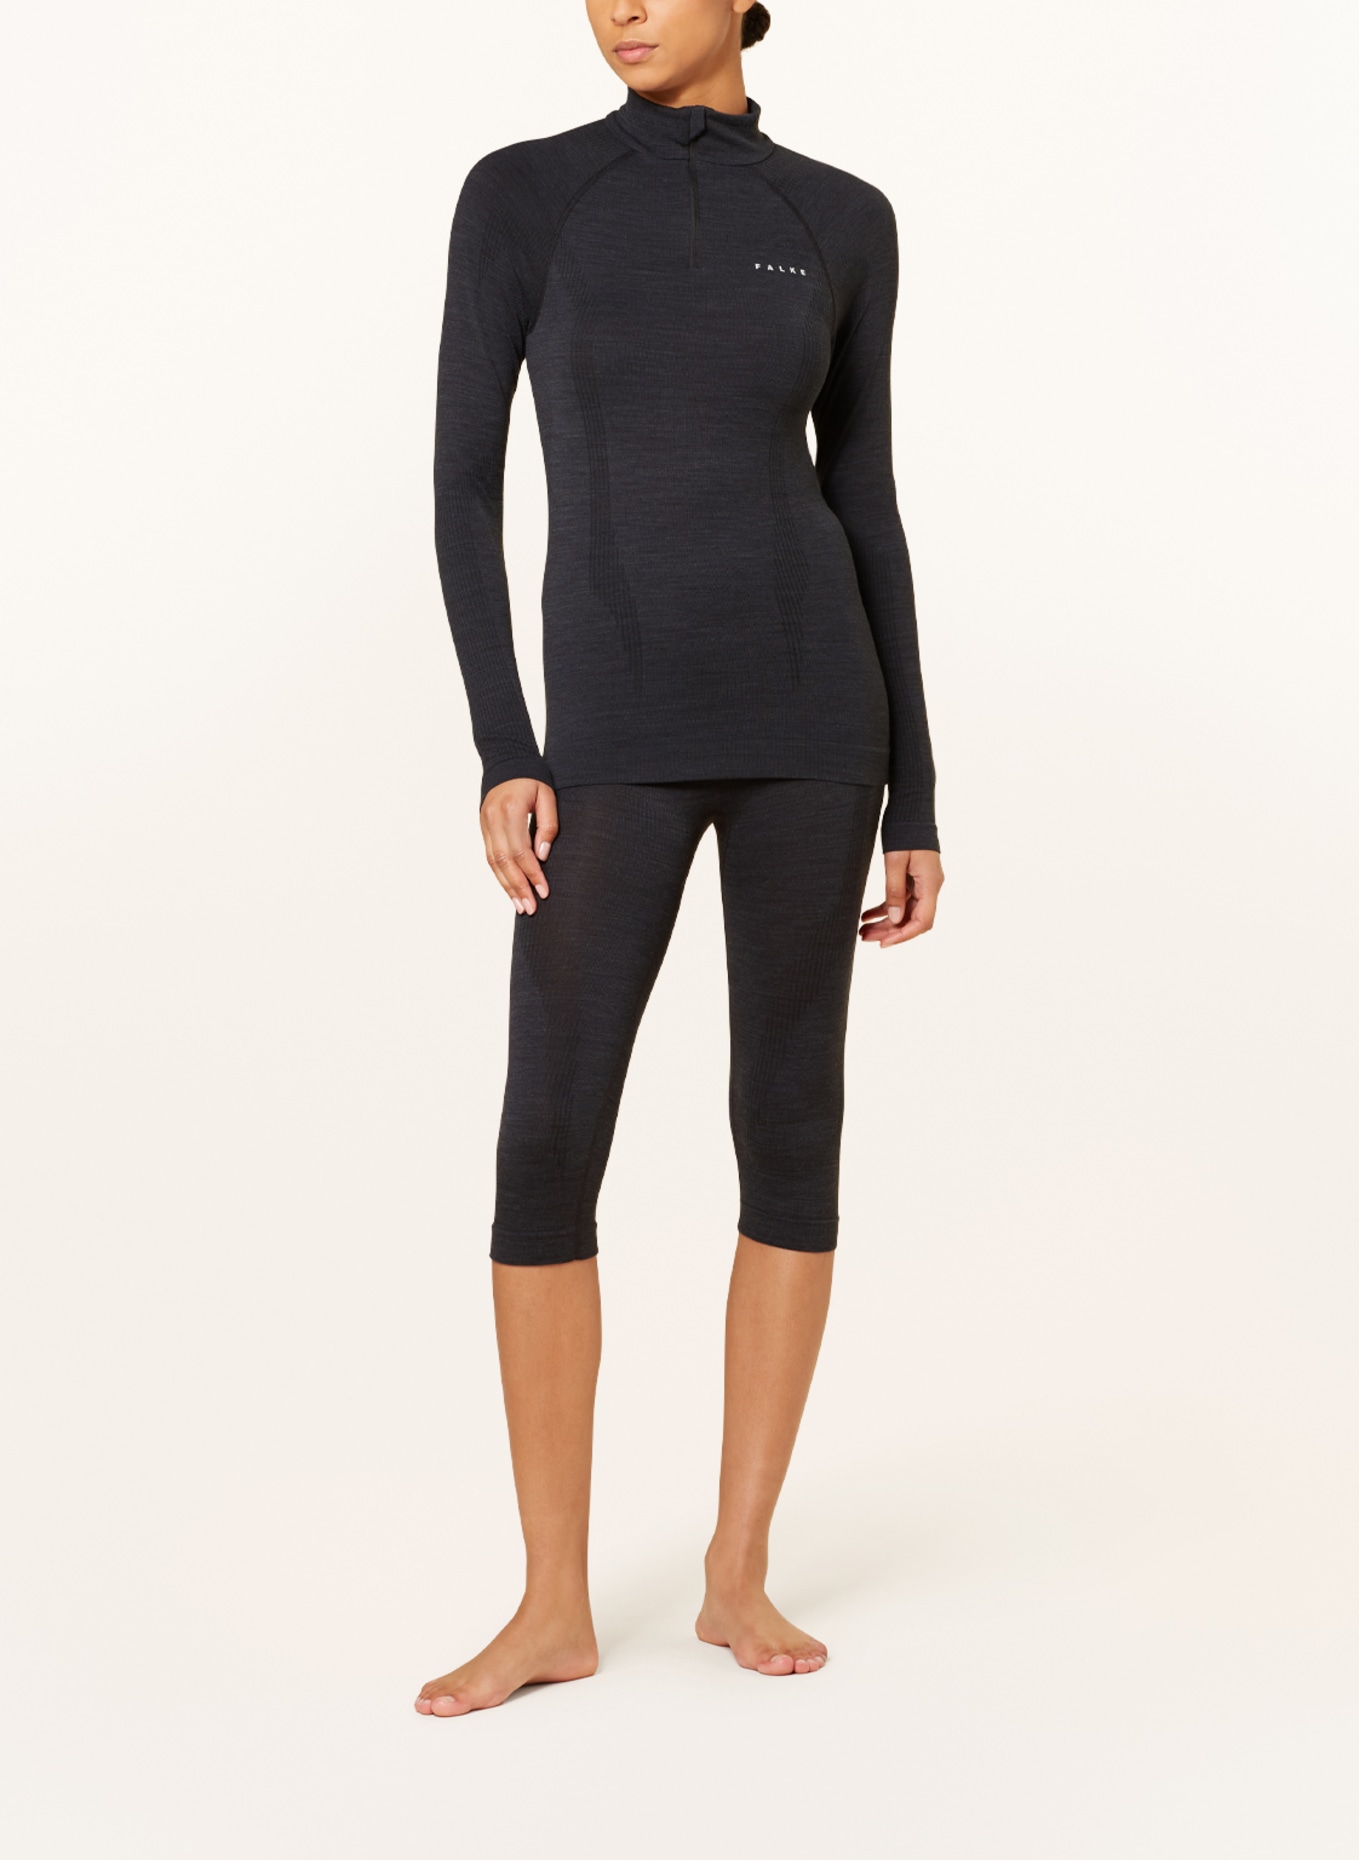 3PC Swimsuit Diving Suit Sets Long Sleeve Swim Trousers Rash Guard Swimwear  Men | eBay